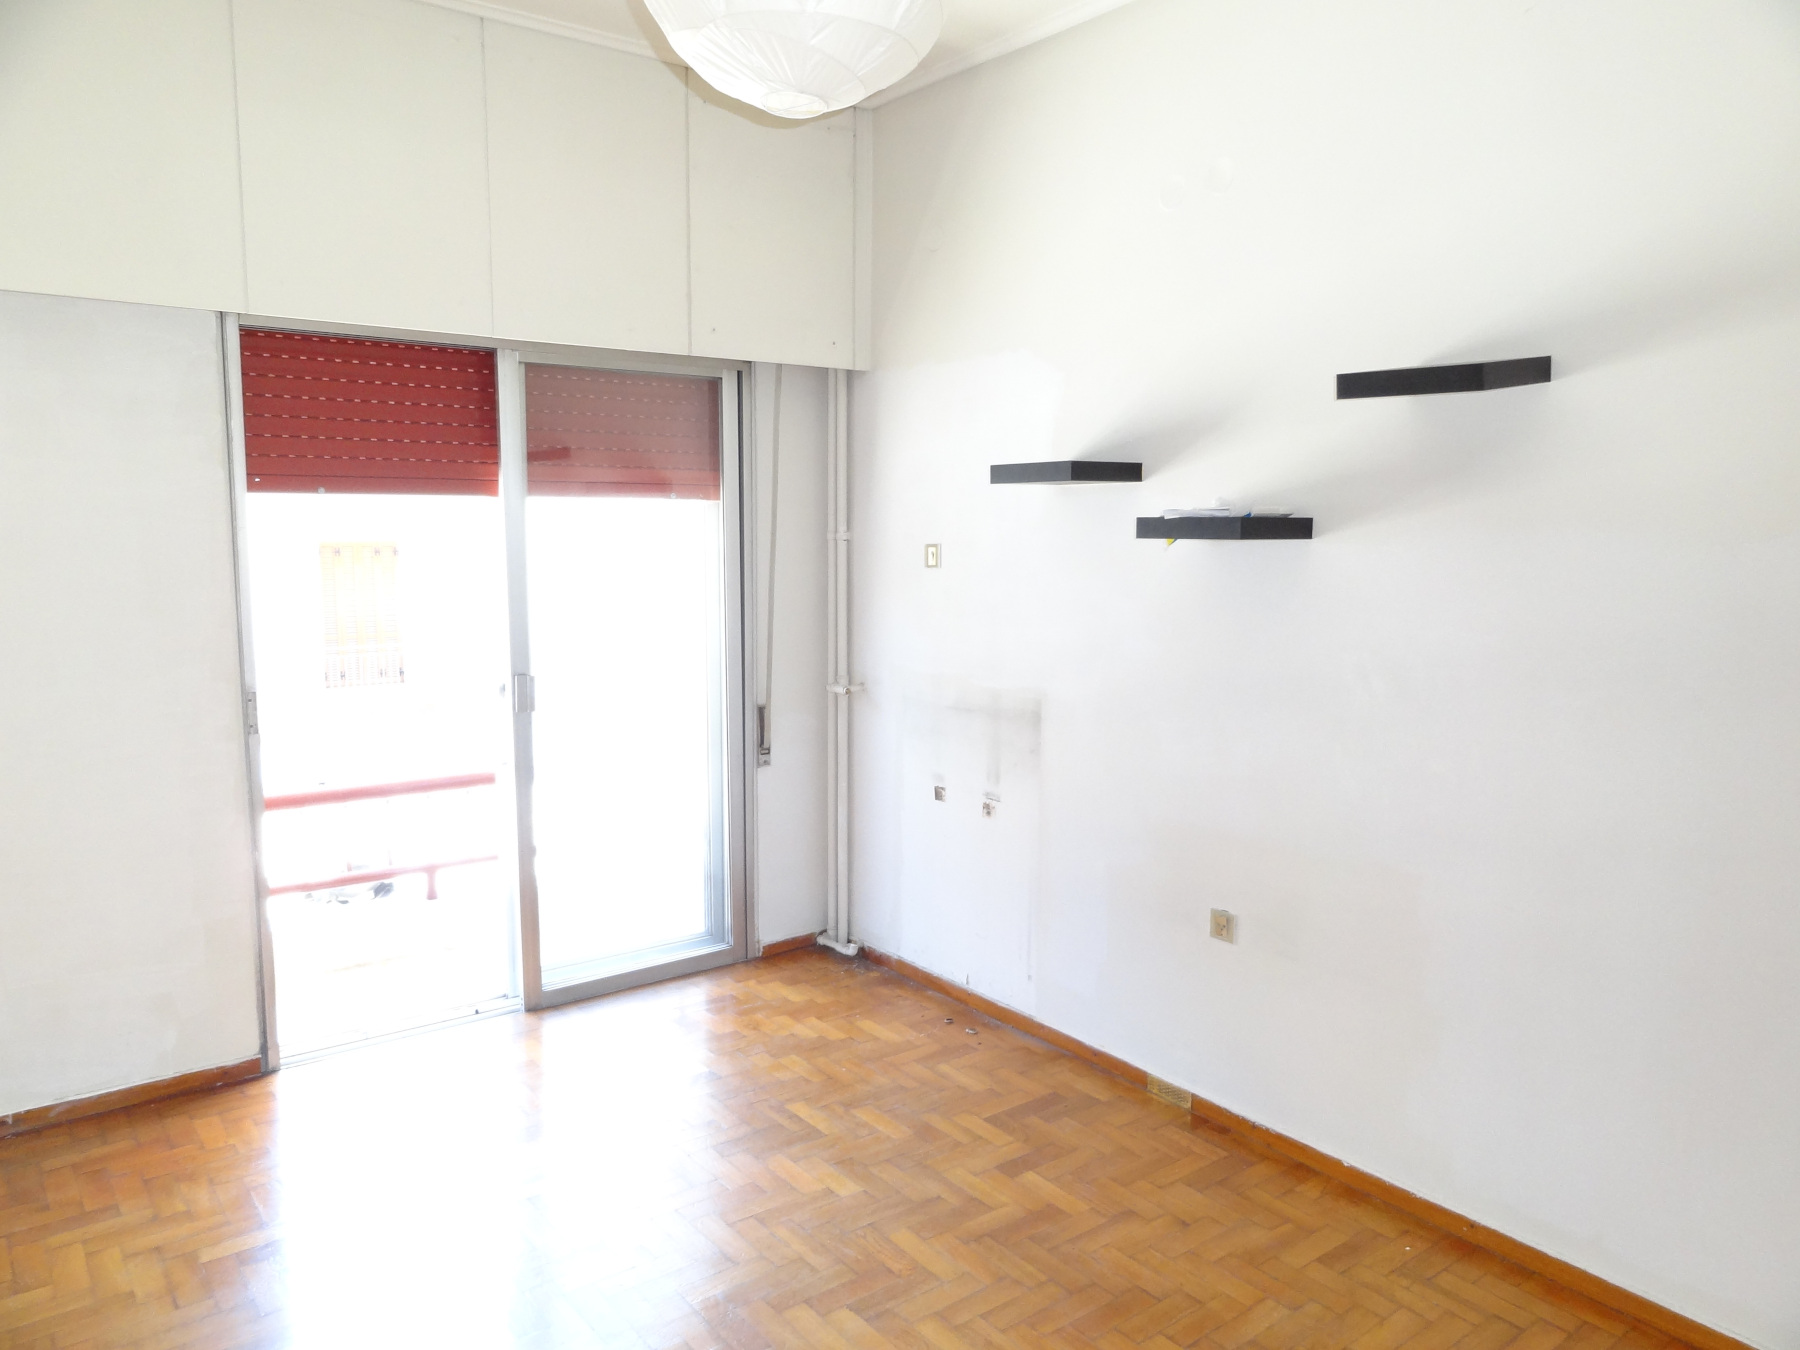 Bright 1 bedroom apartment for rent, 55 sq.m. mezzanine near the center of Ioannina